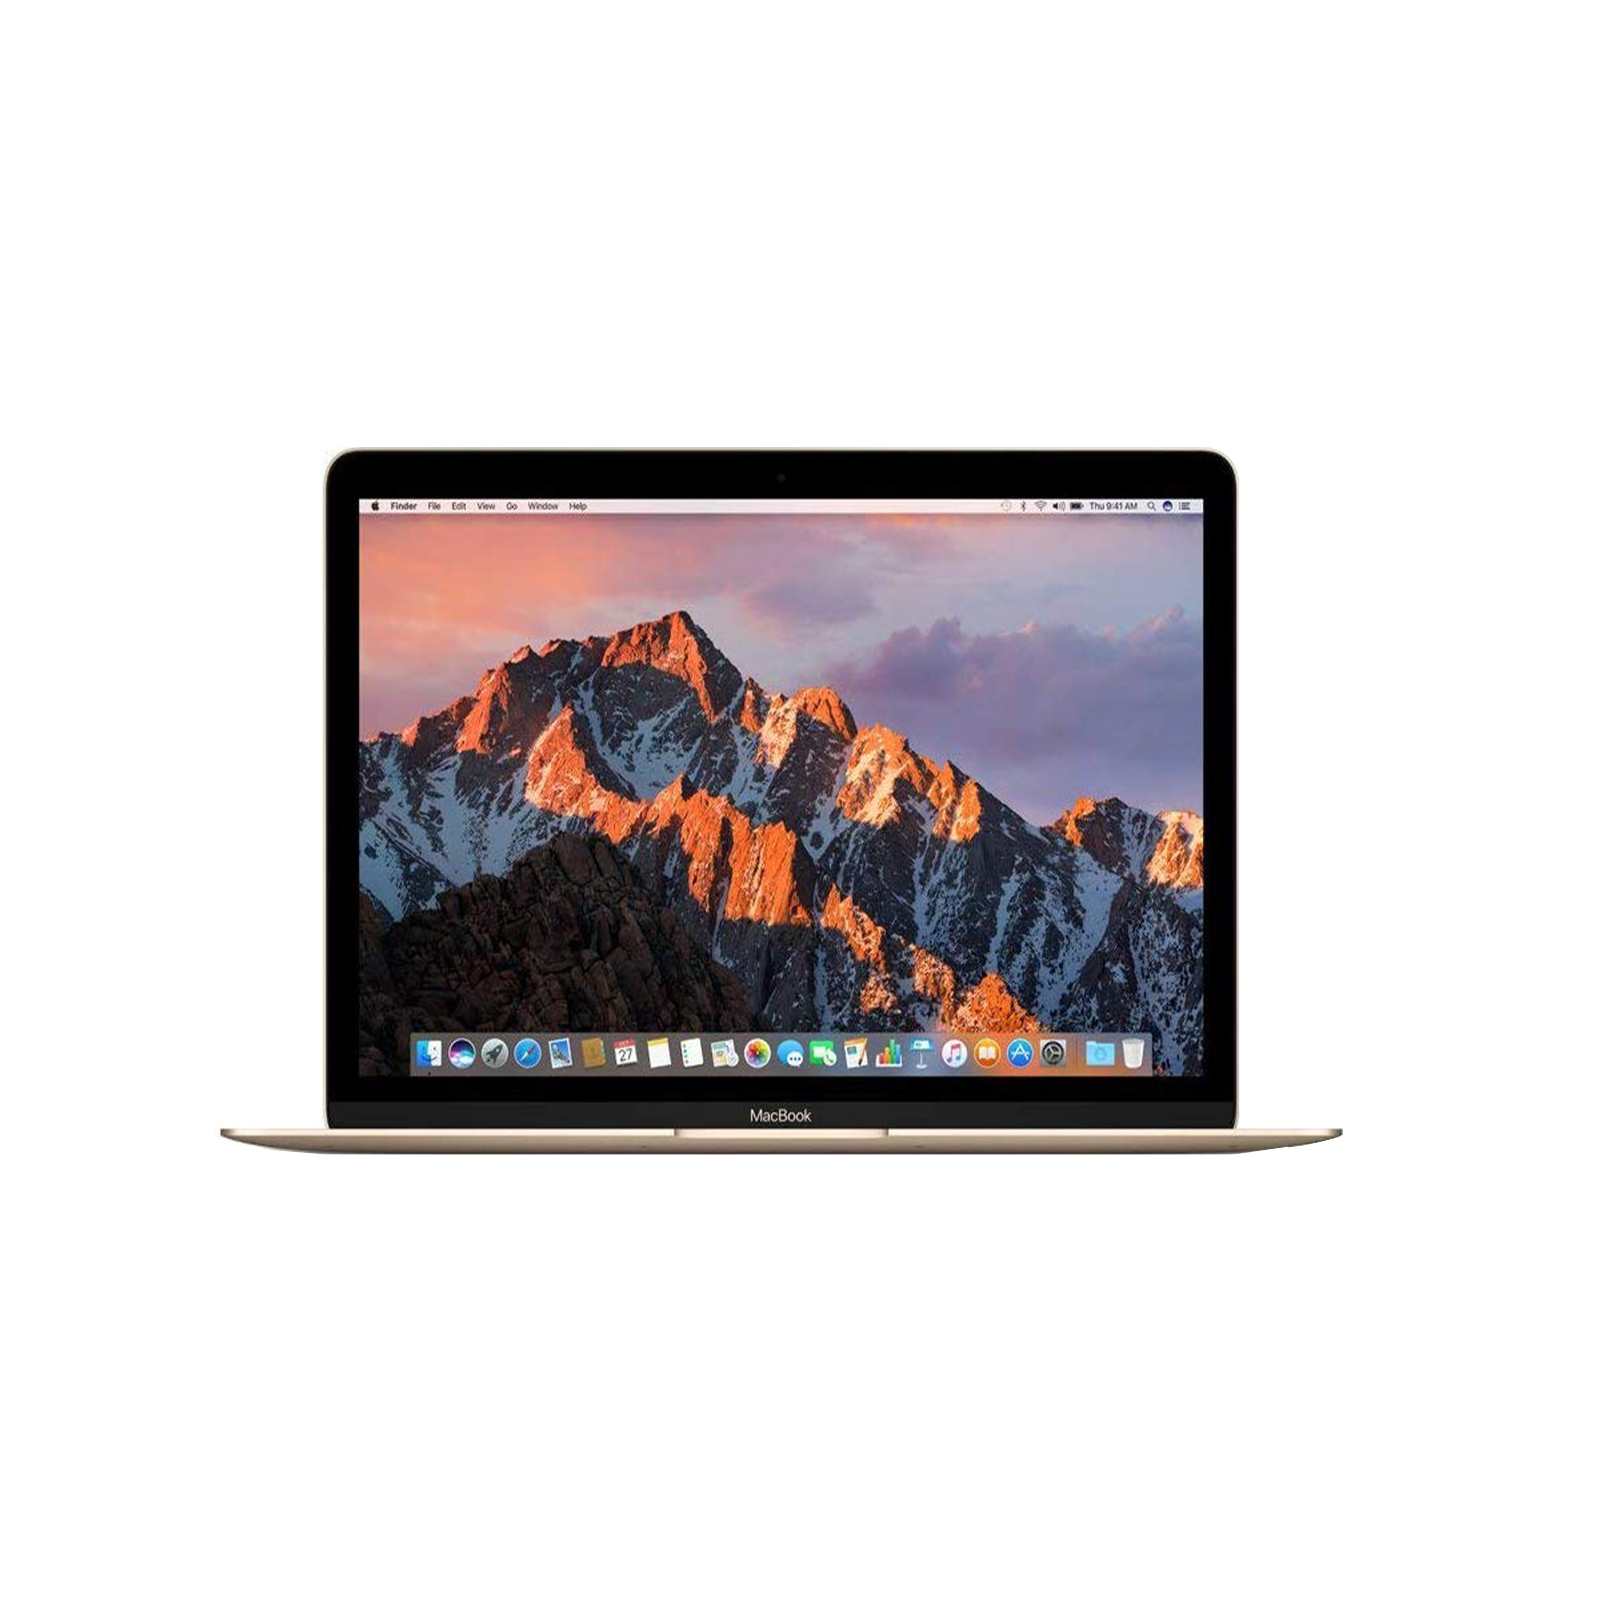 MacBook Pro (13-inch, 2016) Intel Core i5 2.9 GHz 8GB 256GB SSD